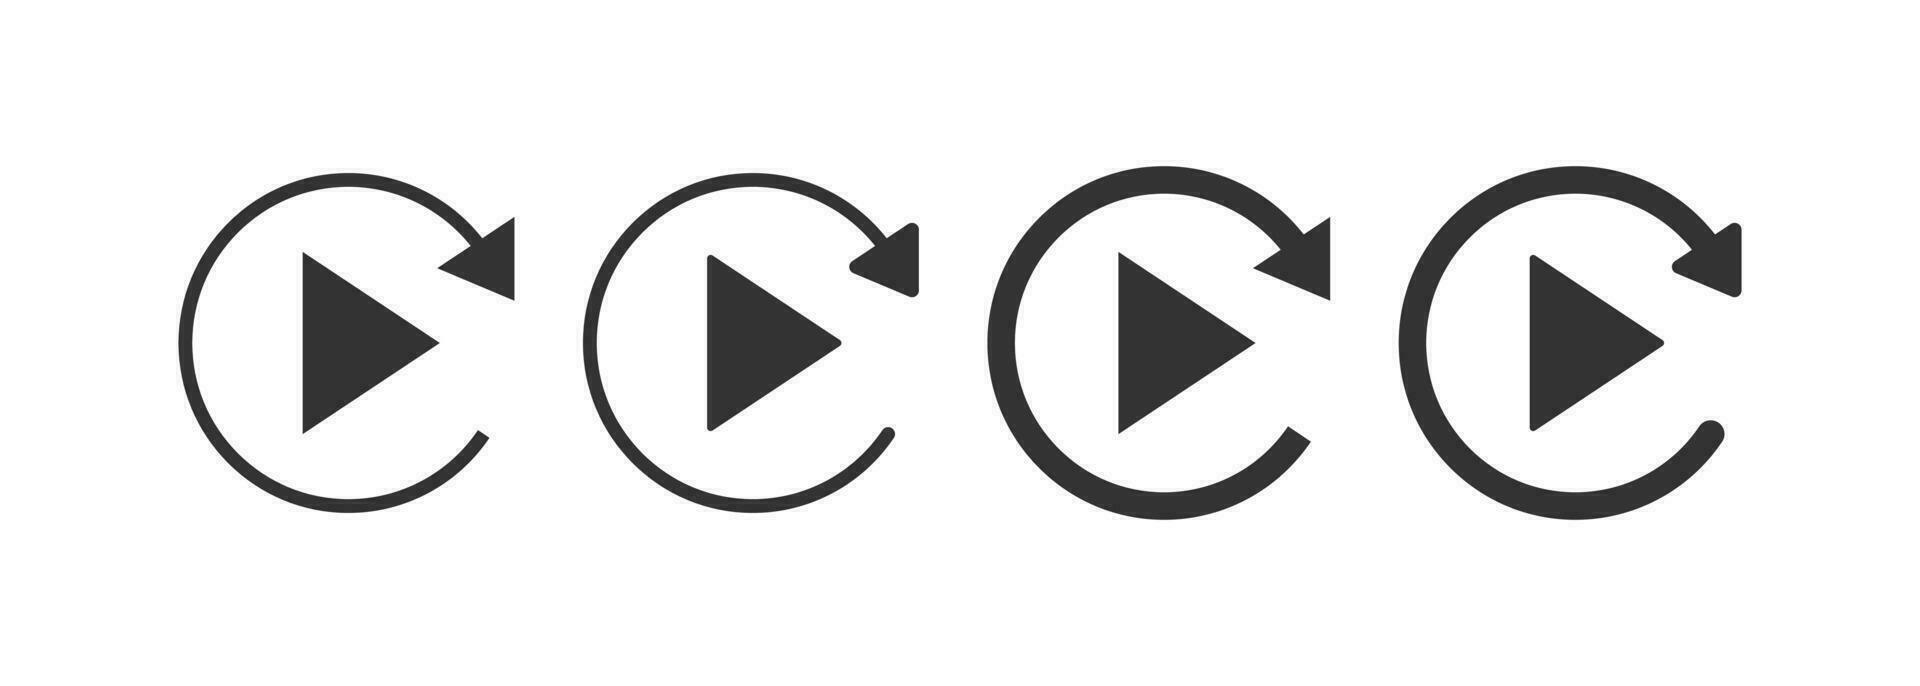 repetición video, película para medios de comunicación línea icono. vector ilustración diseño